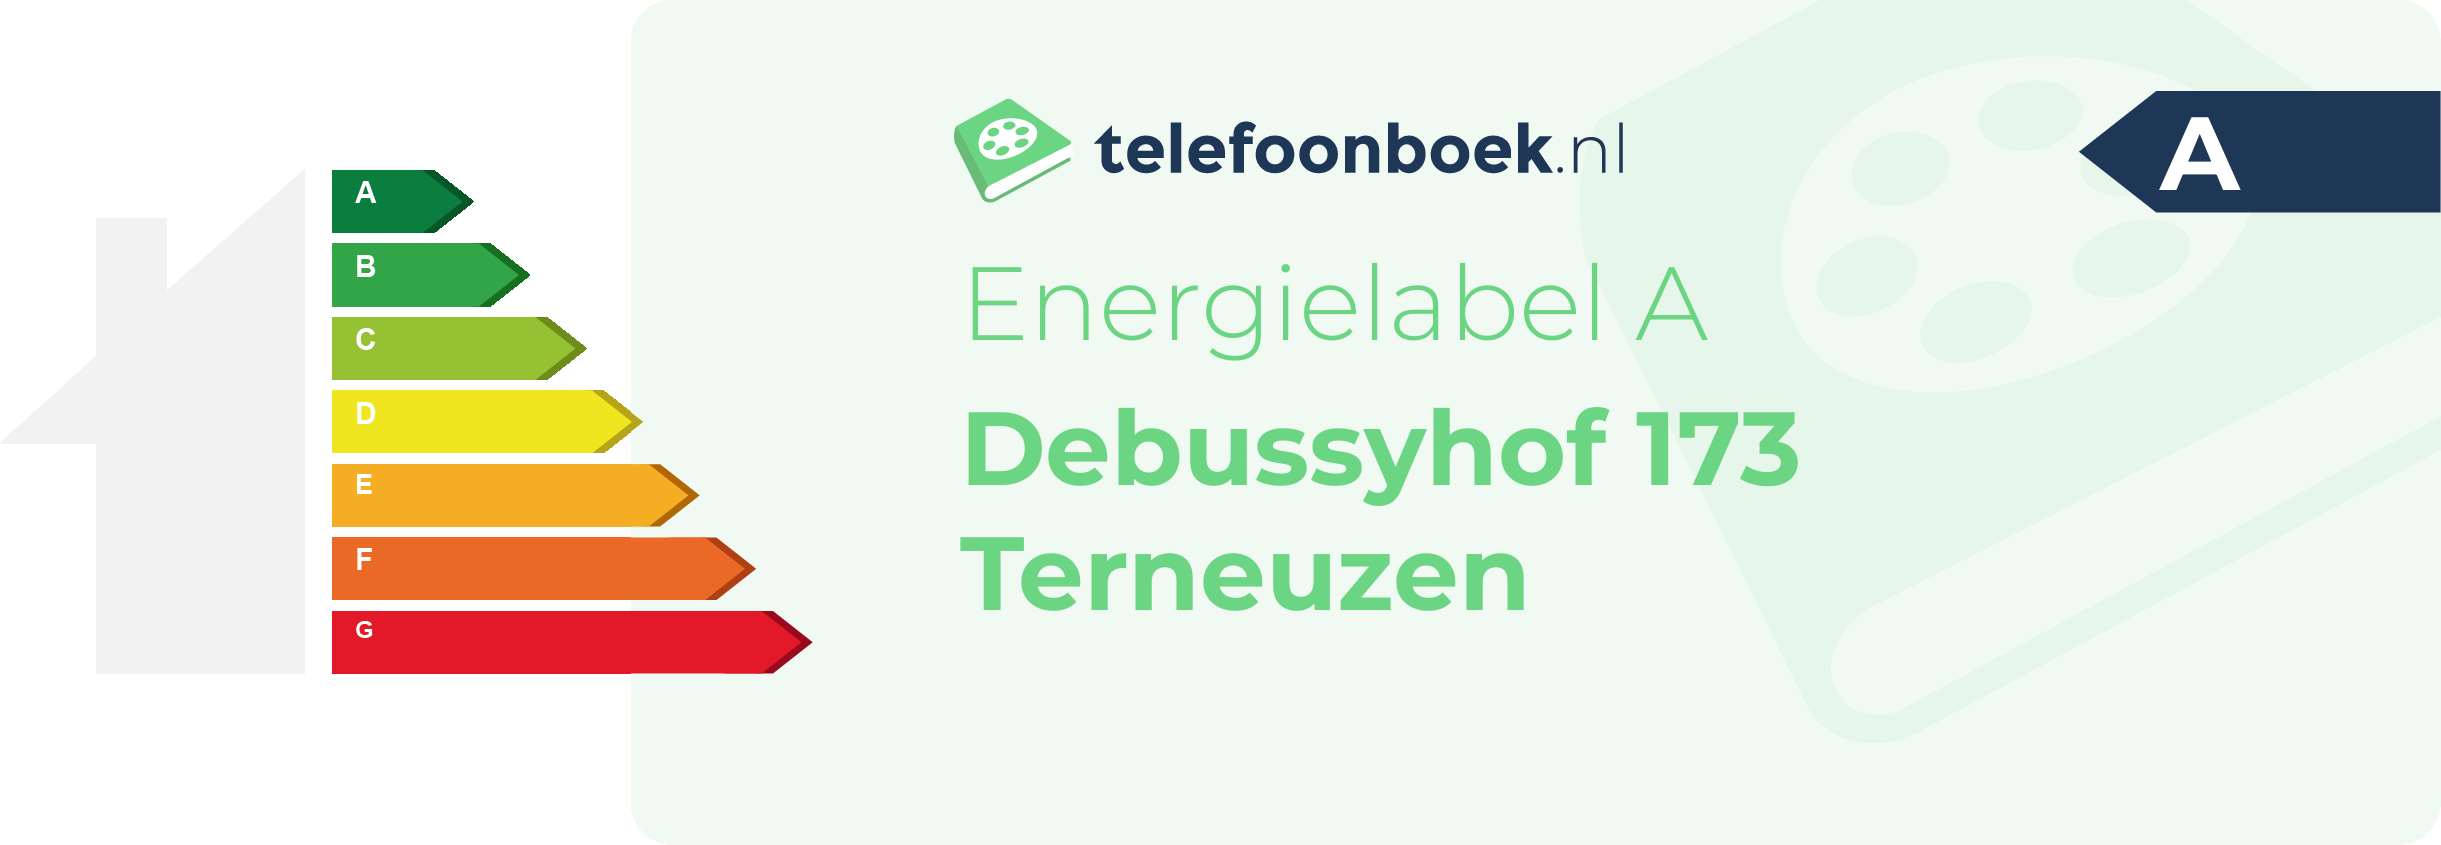 Energielabel Debussyhof 173 Terneuzen